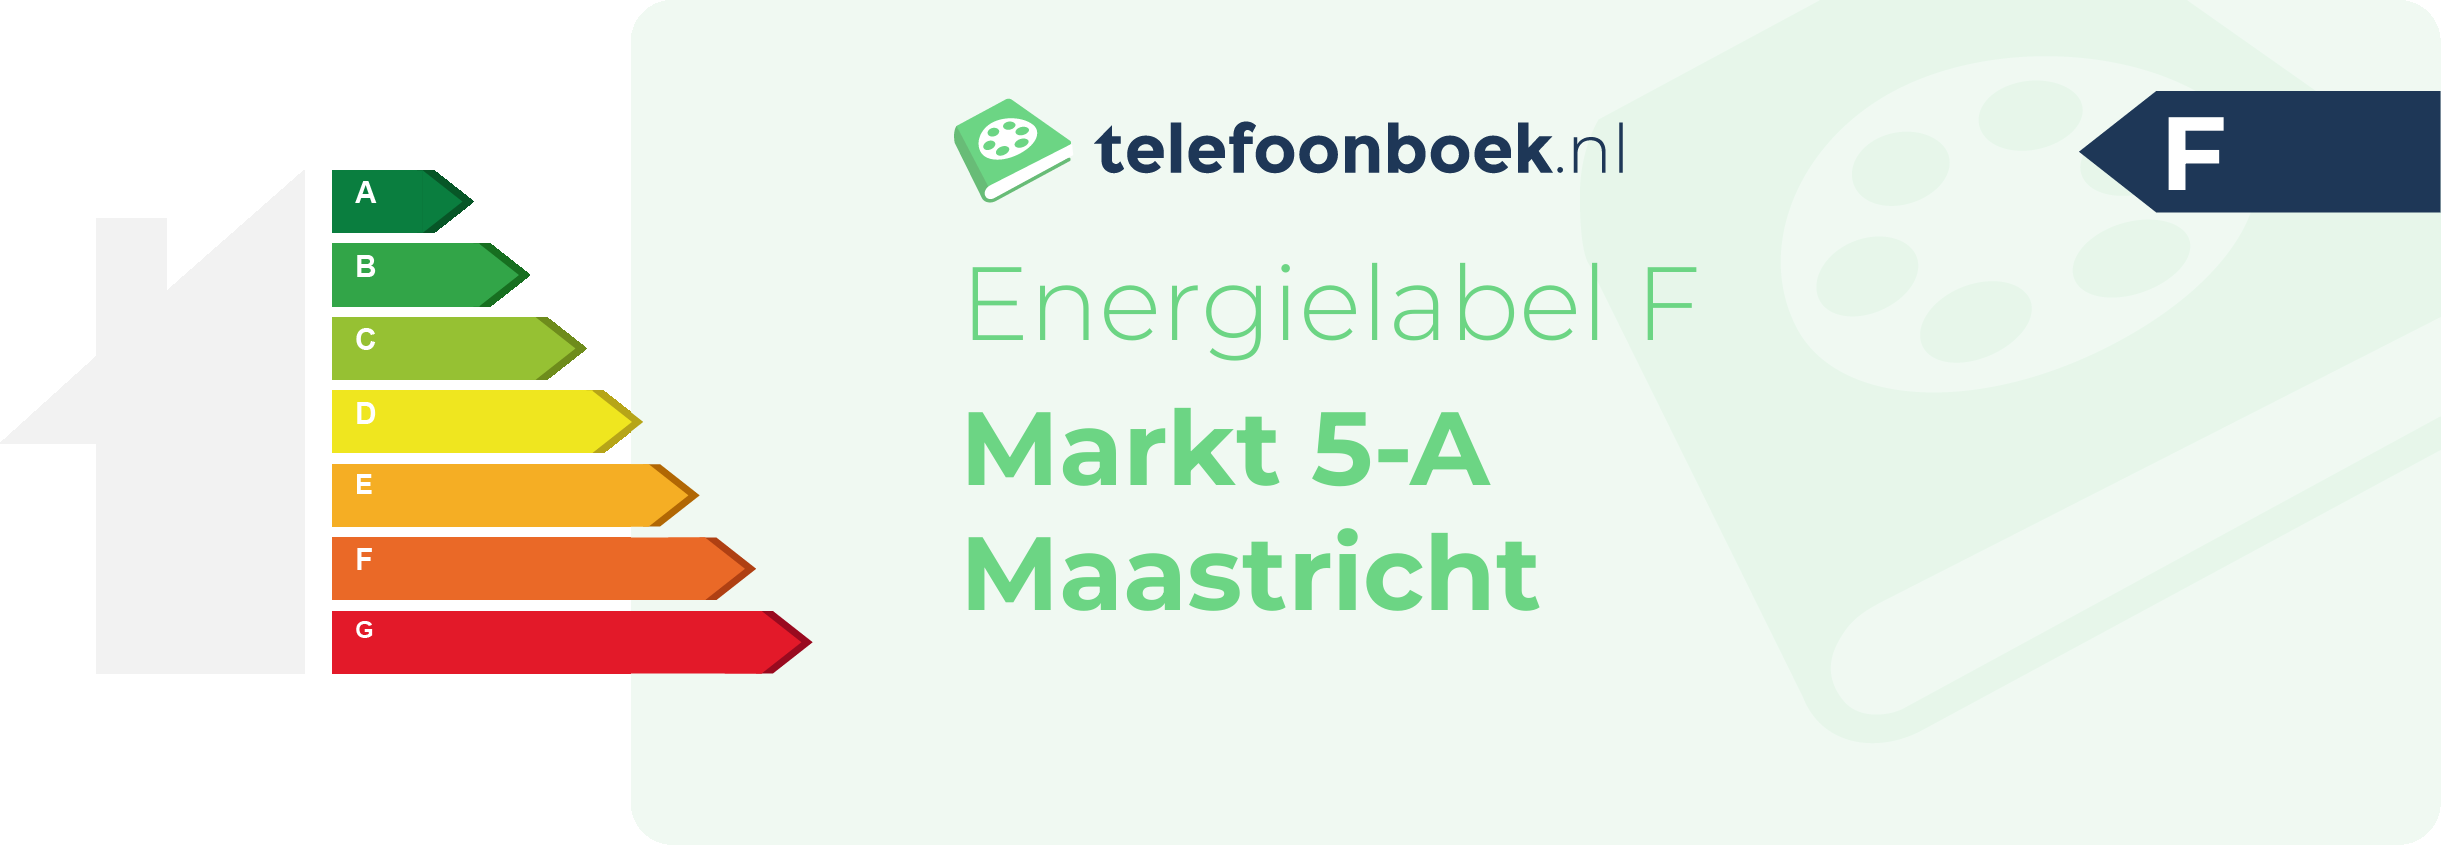 Energielabel Markt 5-A Maastricht